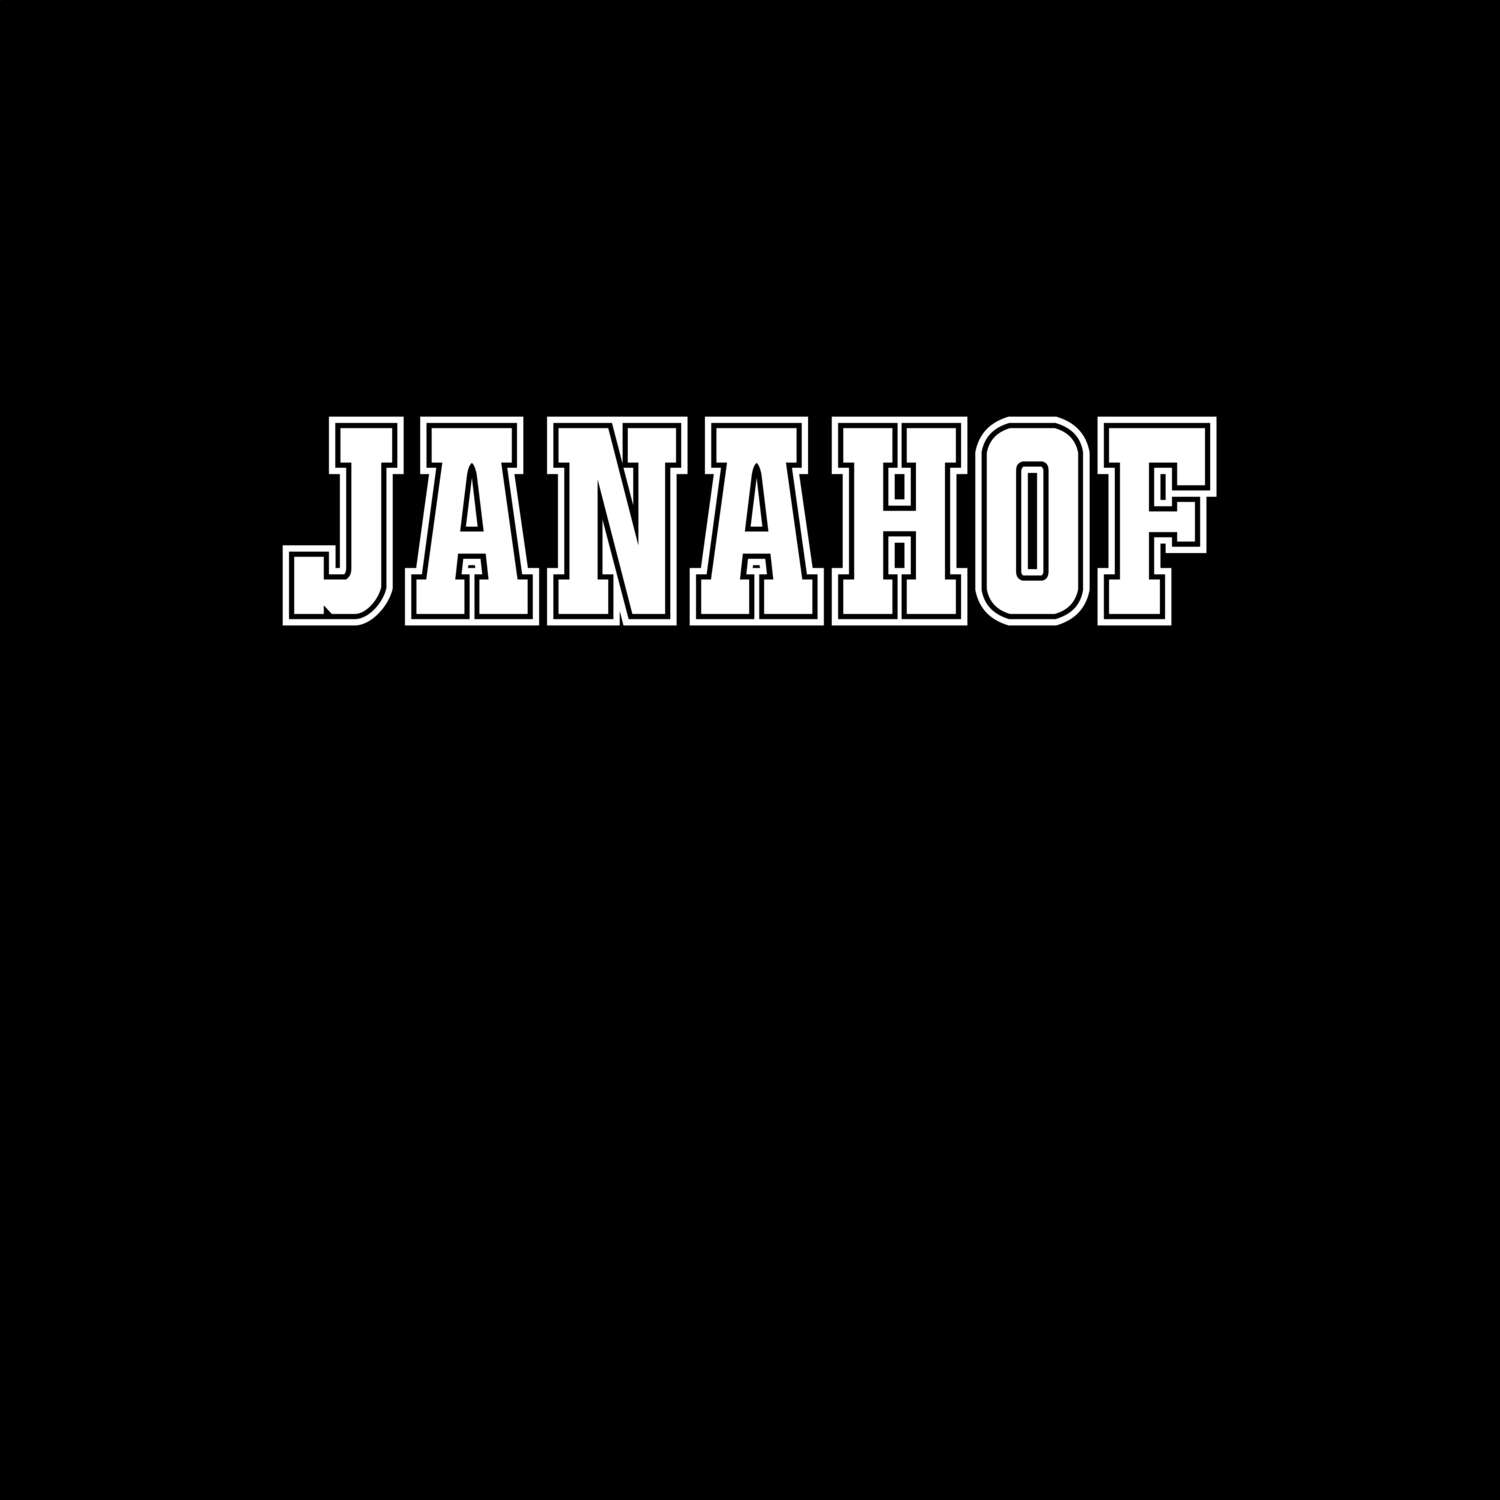 Janahof T-Shirt »Classic«